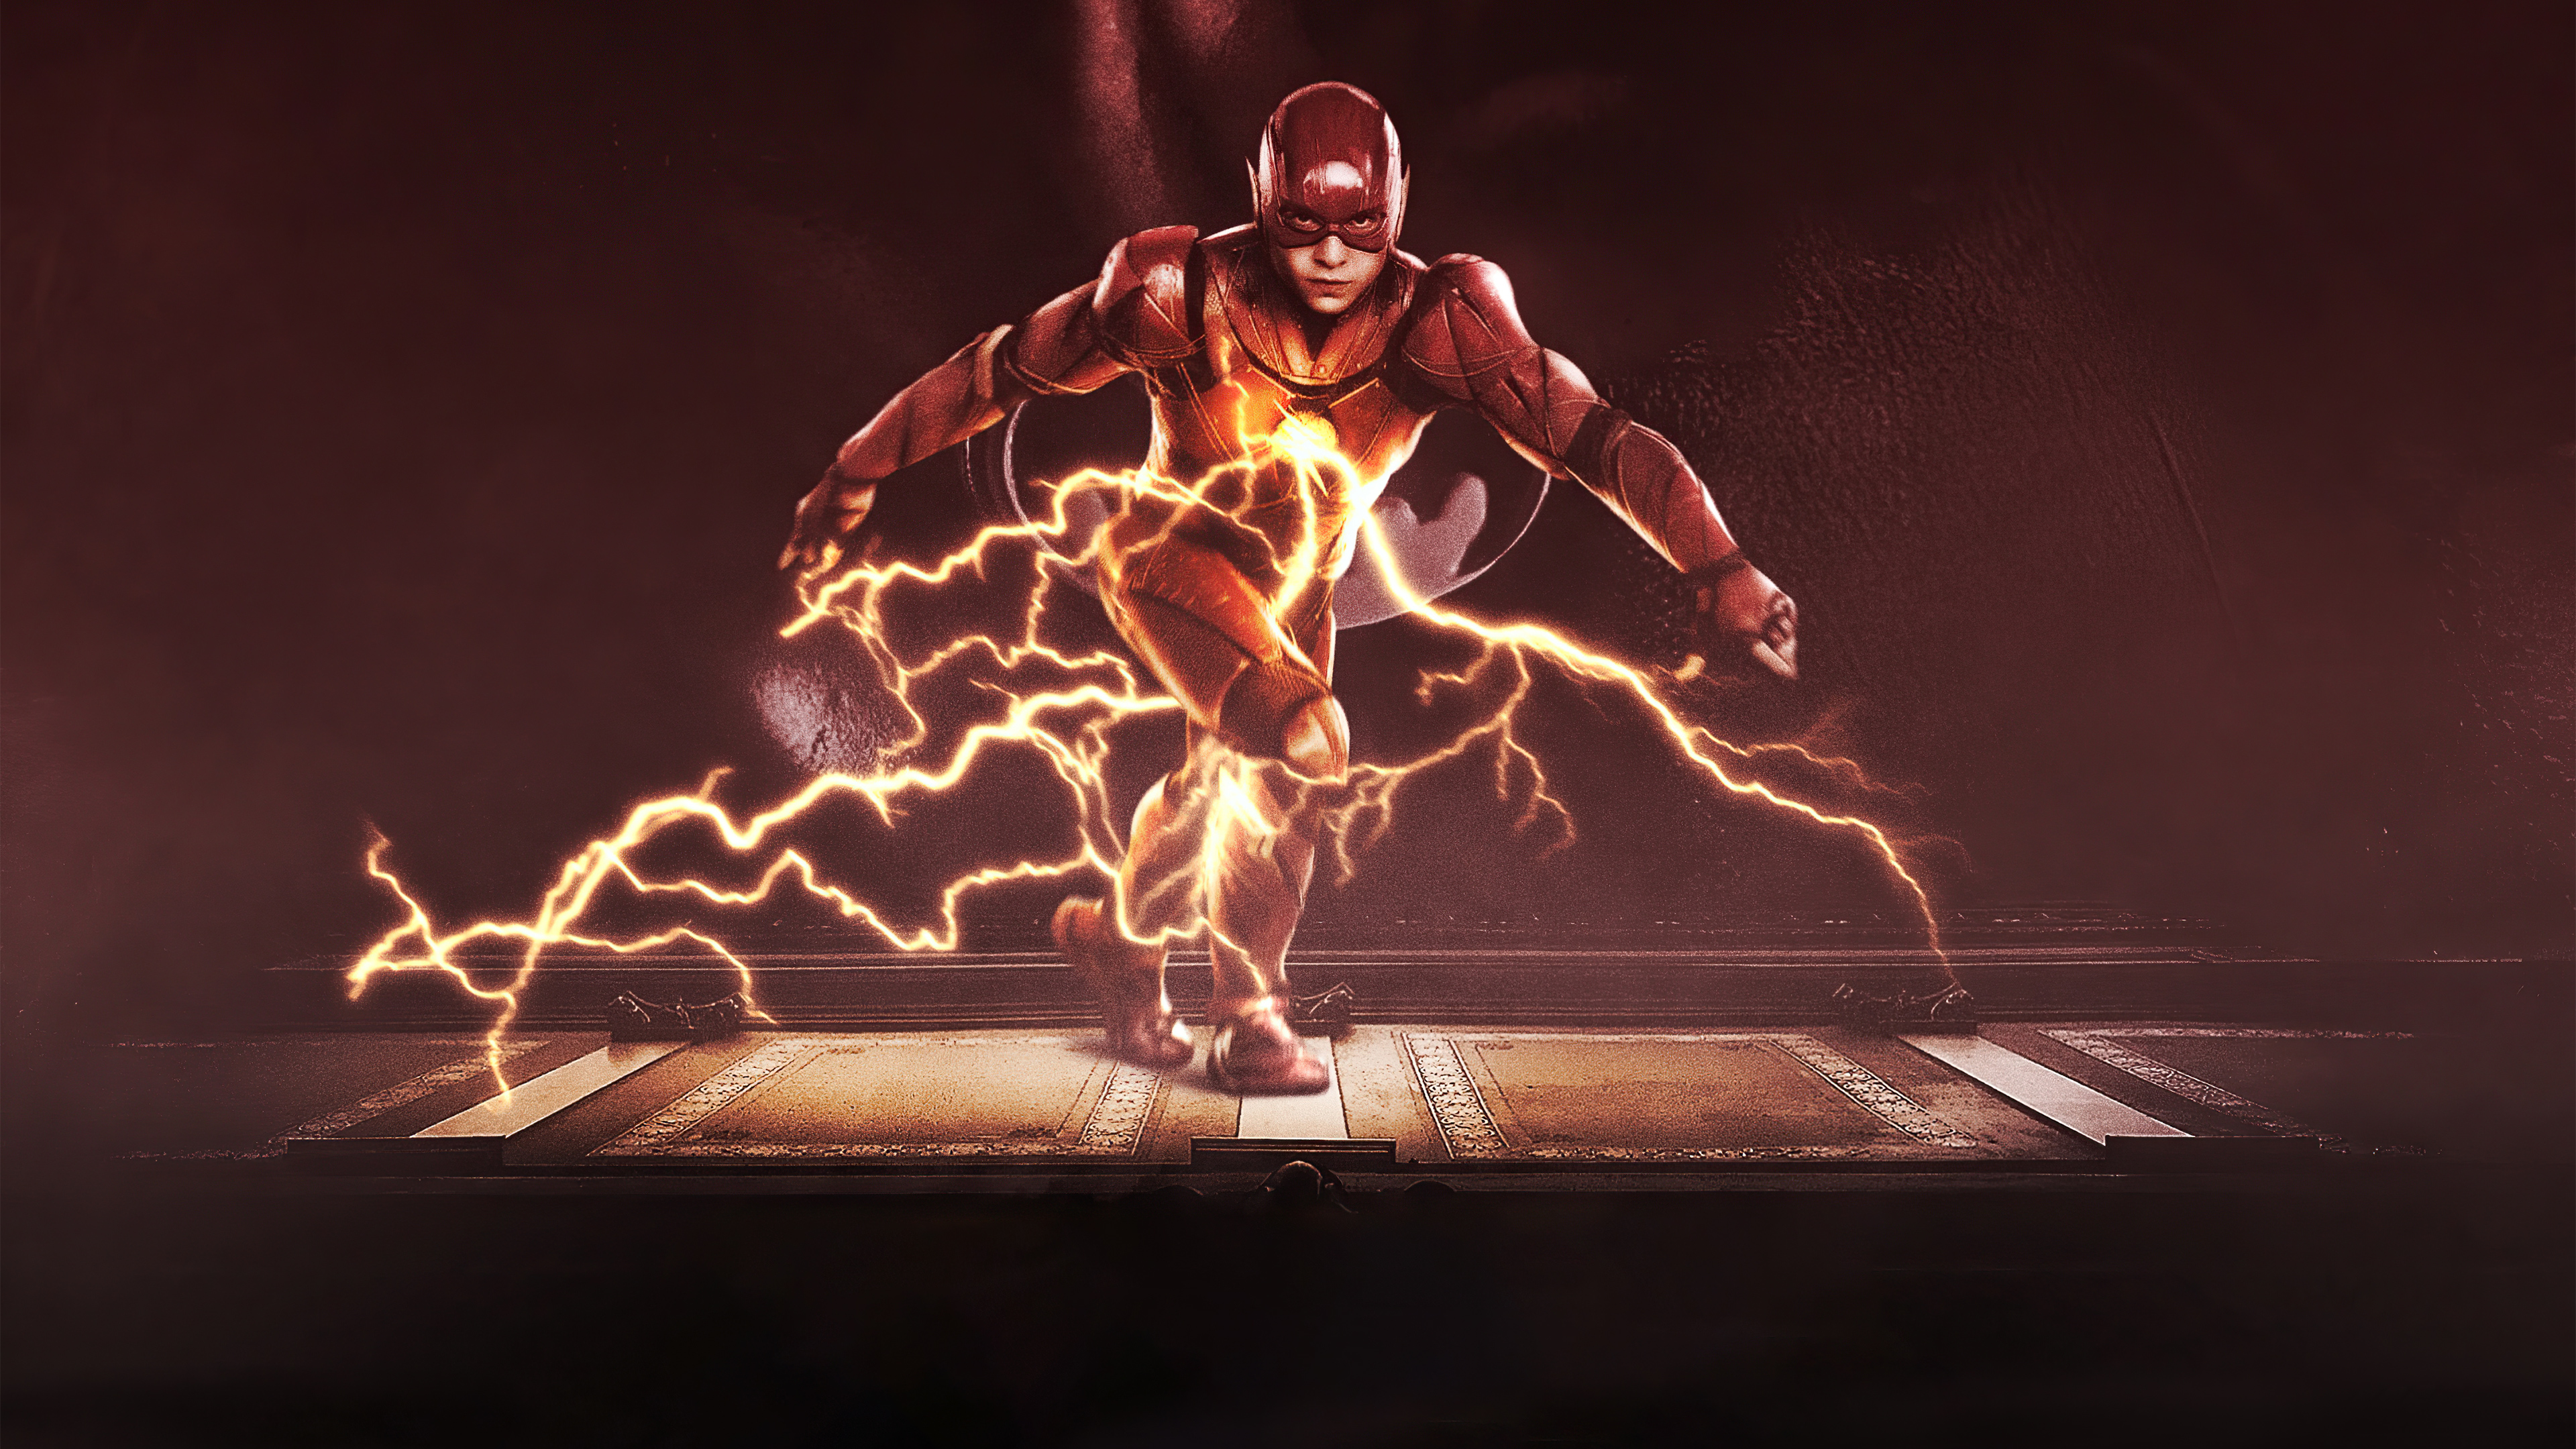 HD desktop wallpaper: Lightning, Flash, Movie, Dc Comics, Justice League,  Barry Allen, Ezra Miller, Zack Snyder's Justice League download free  picture #501060